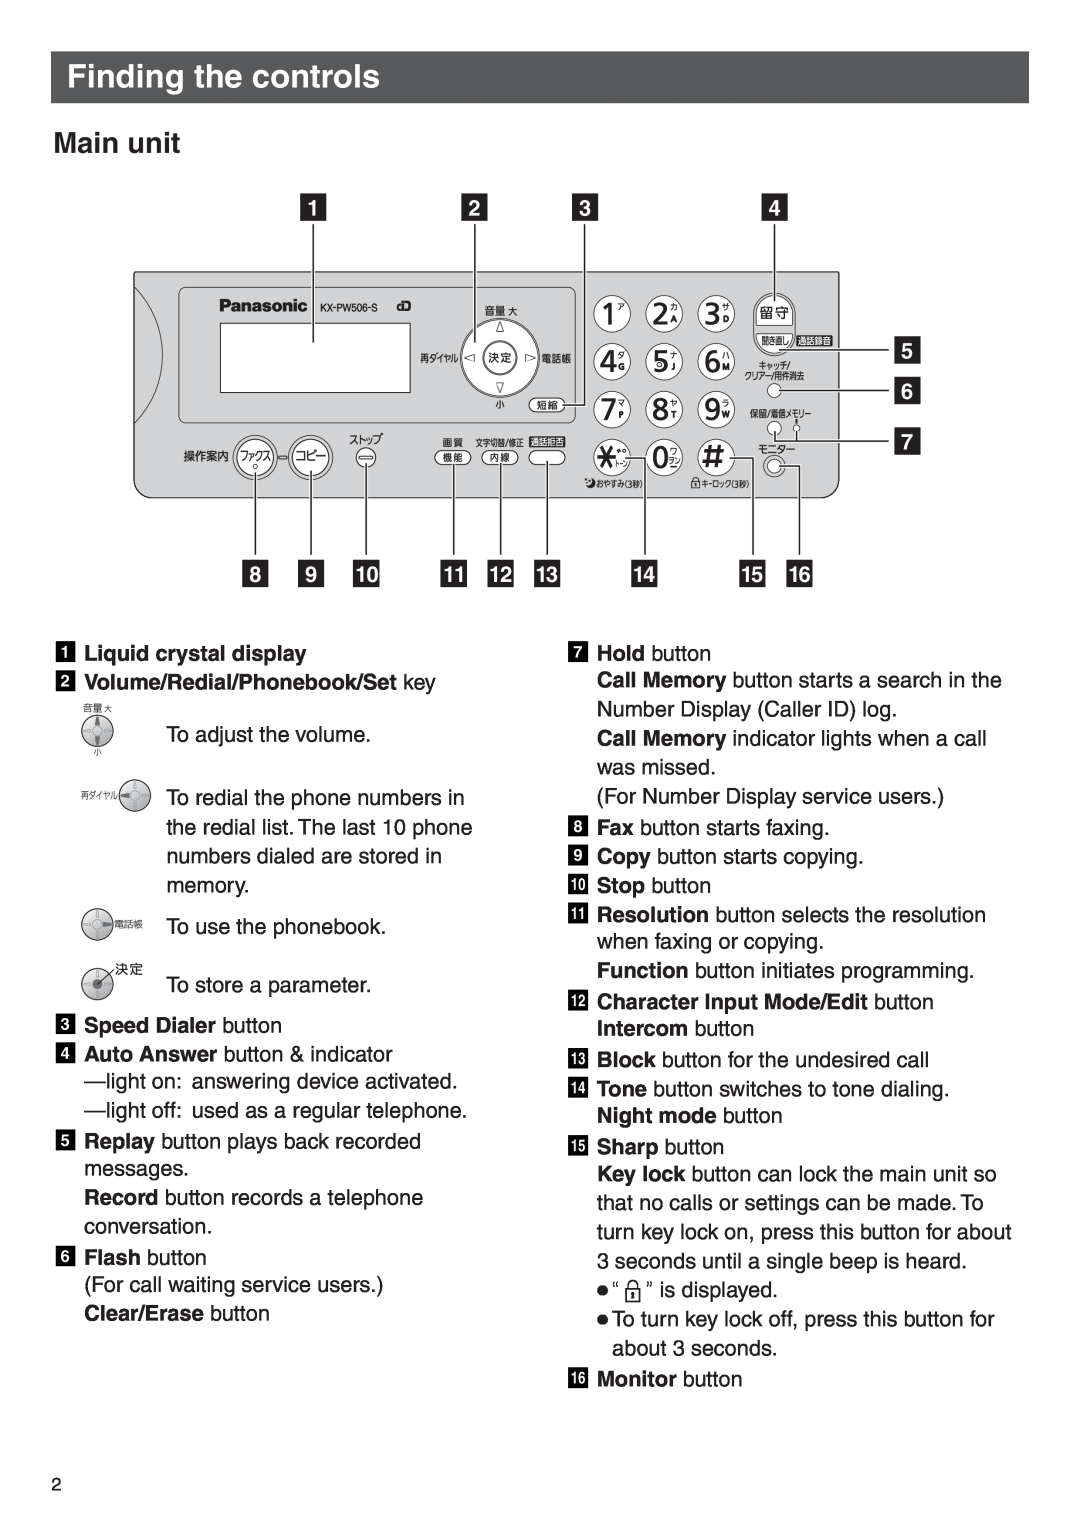 Panasonic KX-PW506DL, KX-PW506DW Finding the controls, Main unit, Liquid crystal display 2 Volume/Redial/Phonebook/Set key 